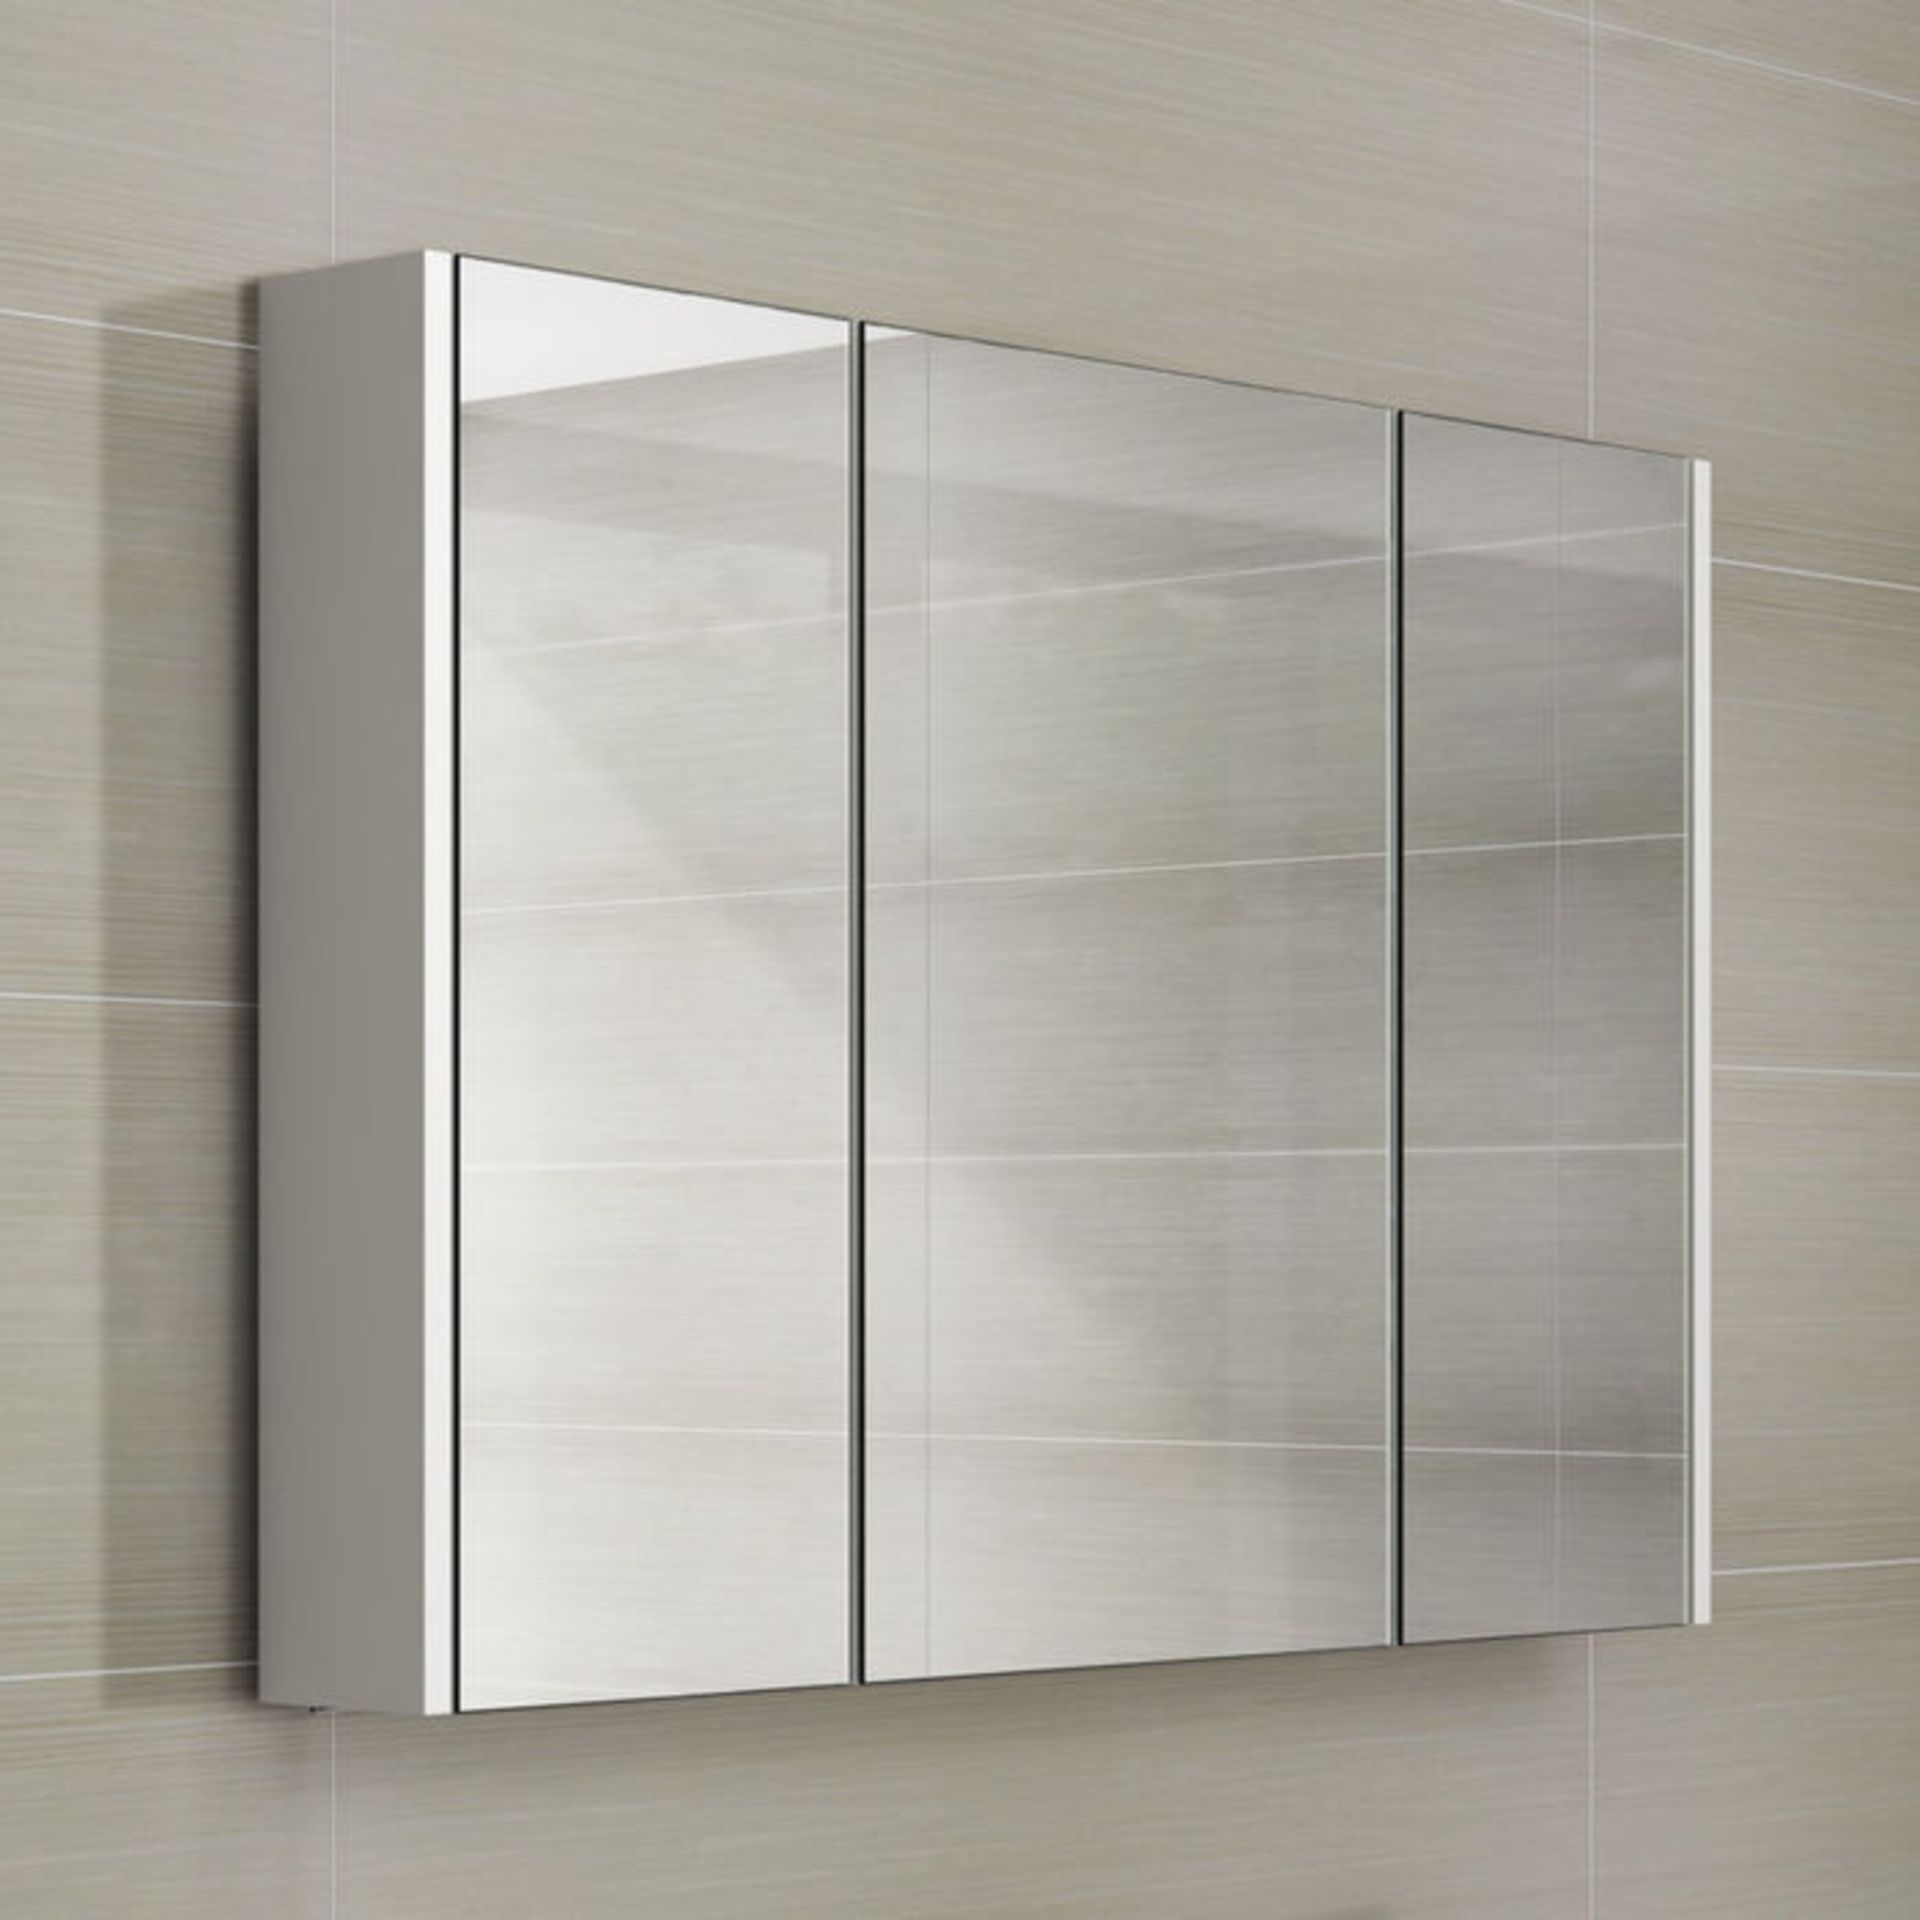 (TA148) 900mm Gloss White Triple Door Mirror Cabinet. RRP £299.99. Sleek contemporary design